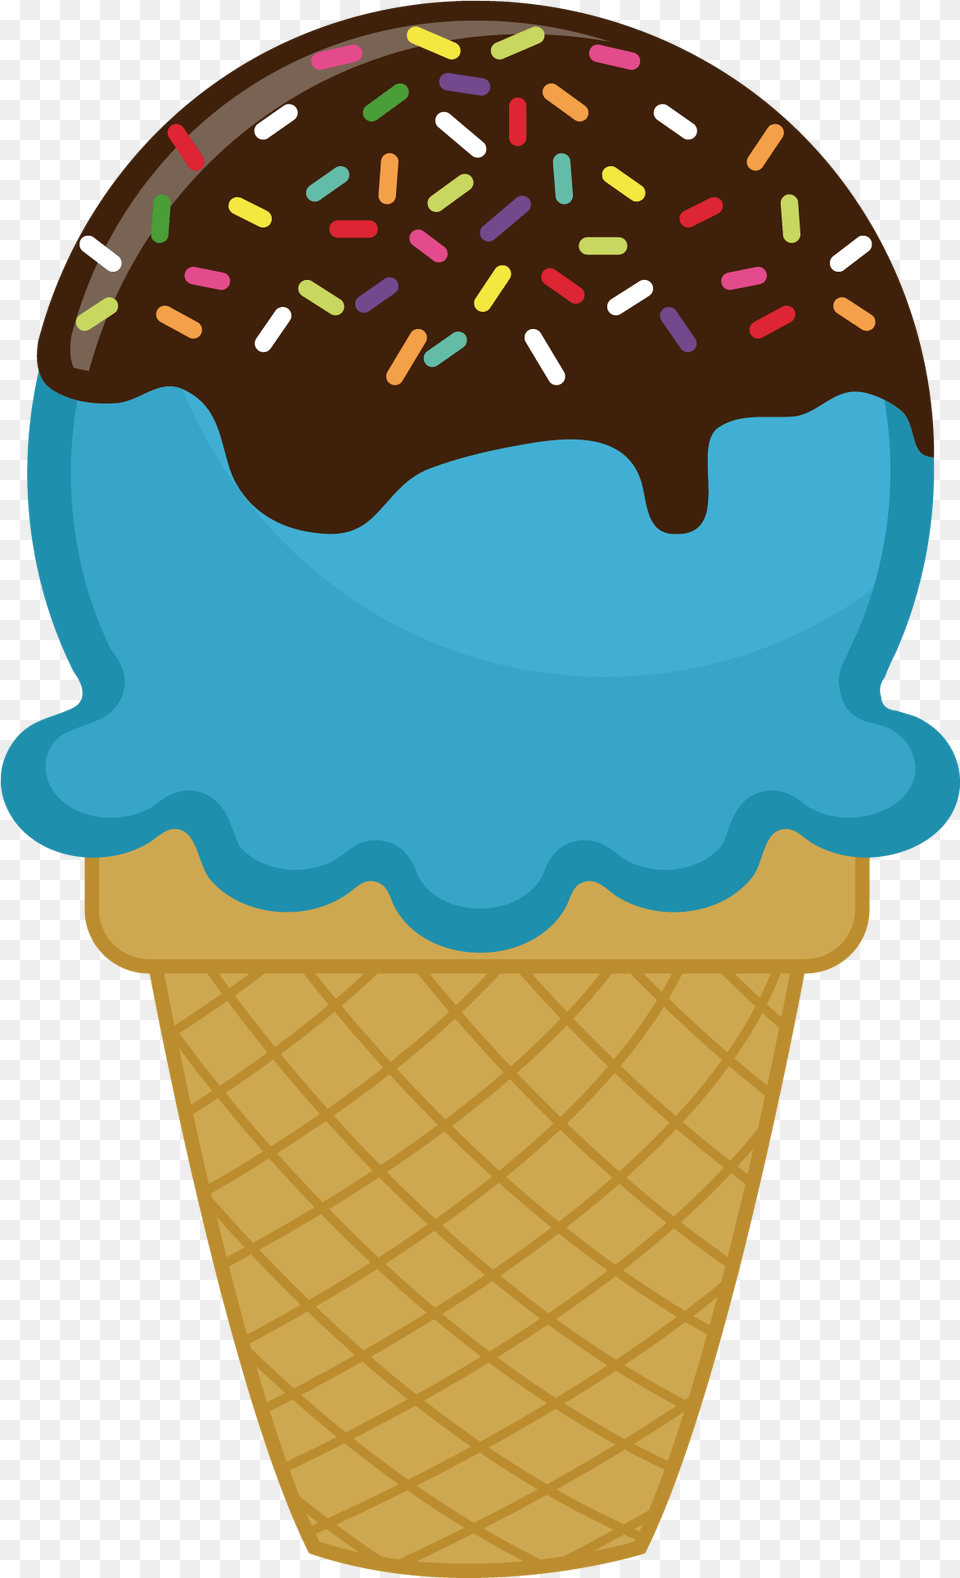 Ice Cream With Sprinkles Clipart, Dessert, Food, Ice Cream, Birthday Cake Png